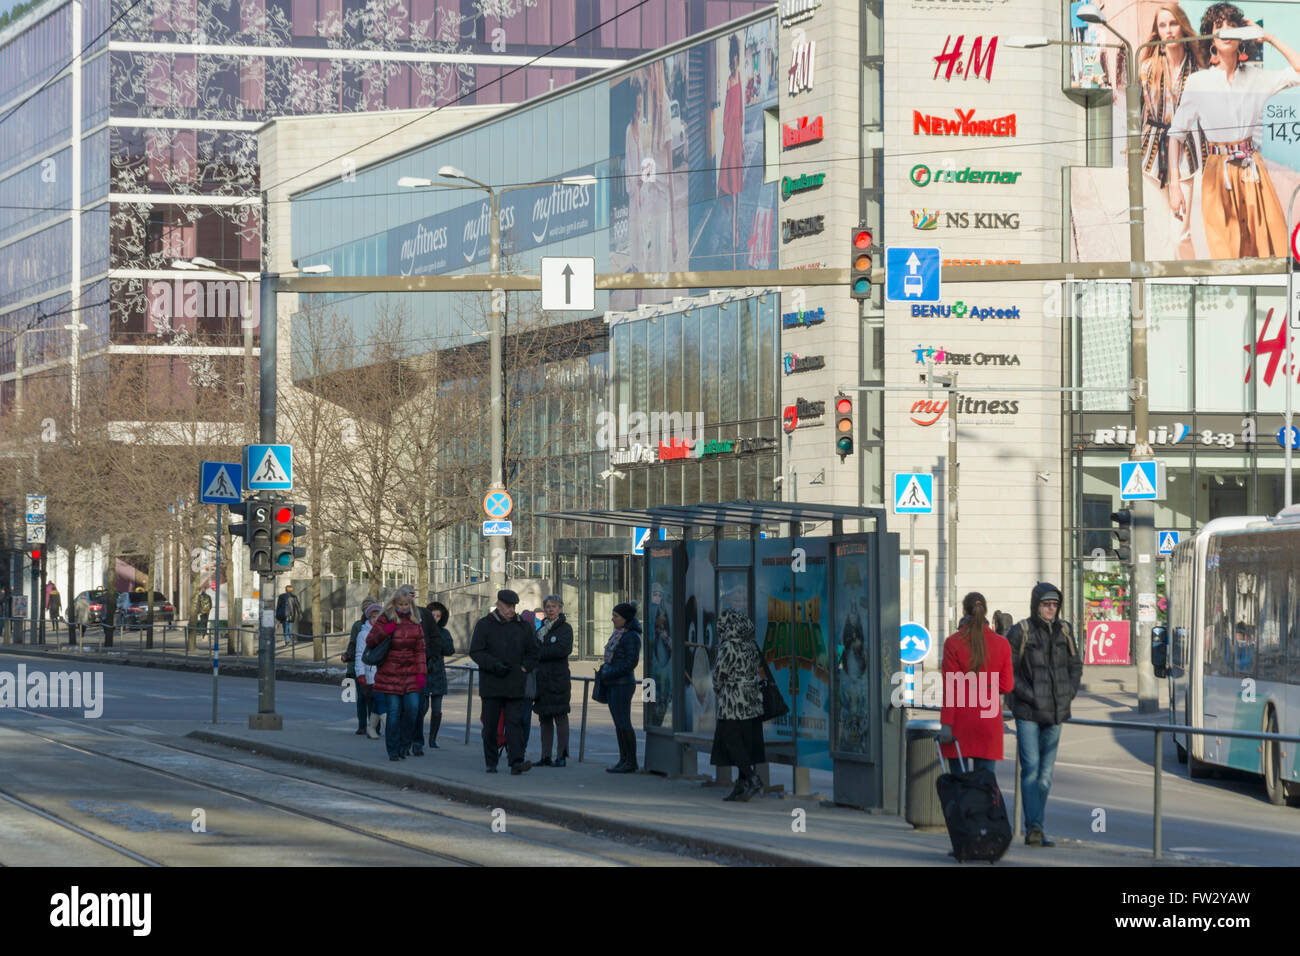 Hobujaama tram stop in Tallinn Estonia Stock Photo - Alamy